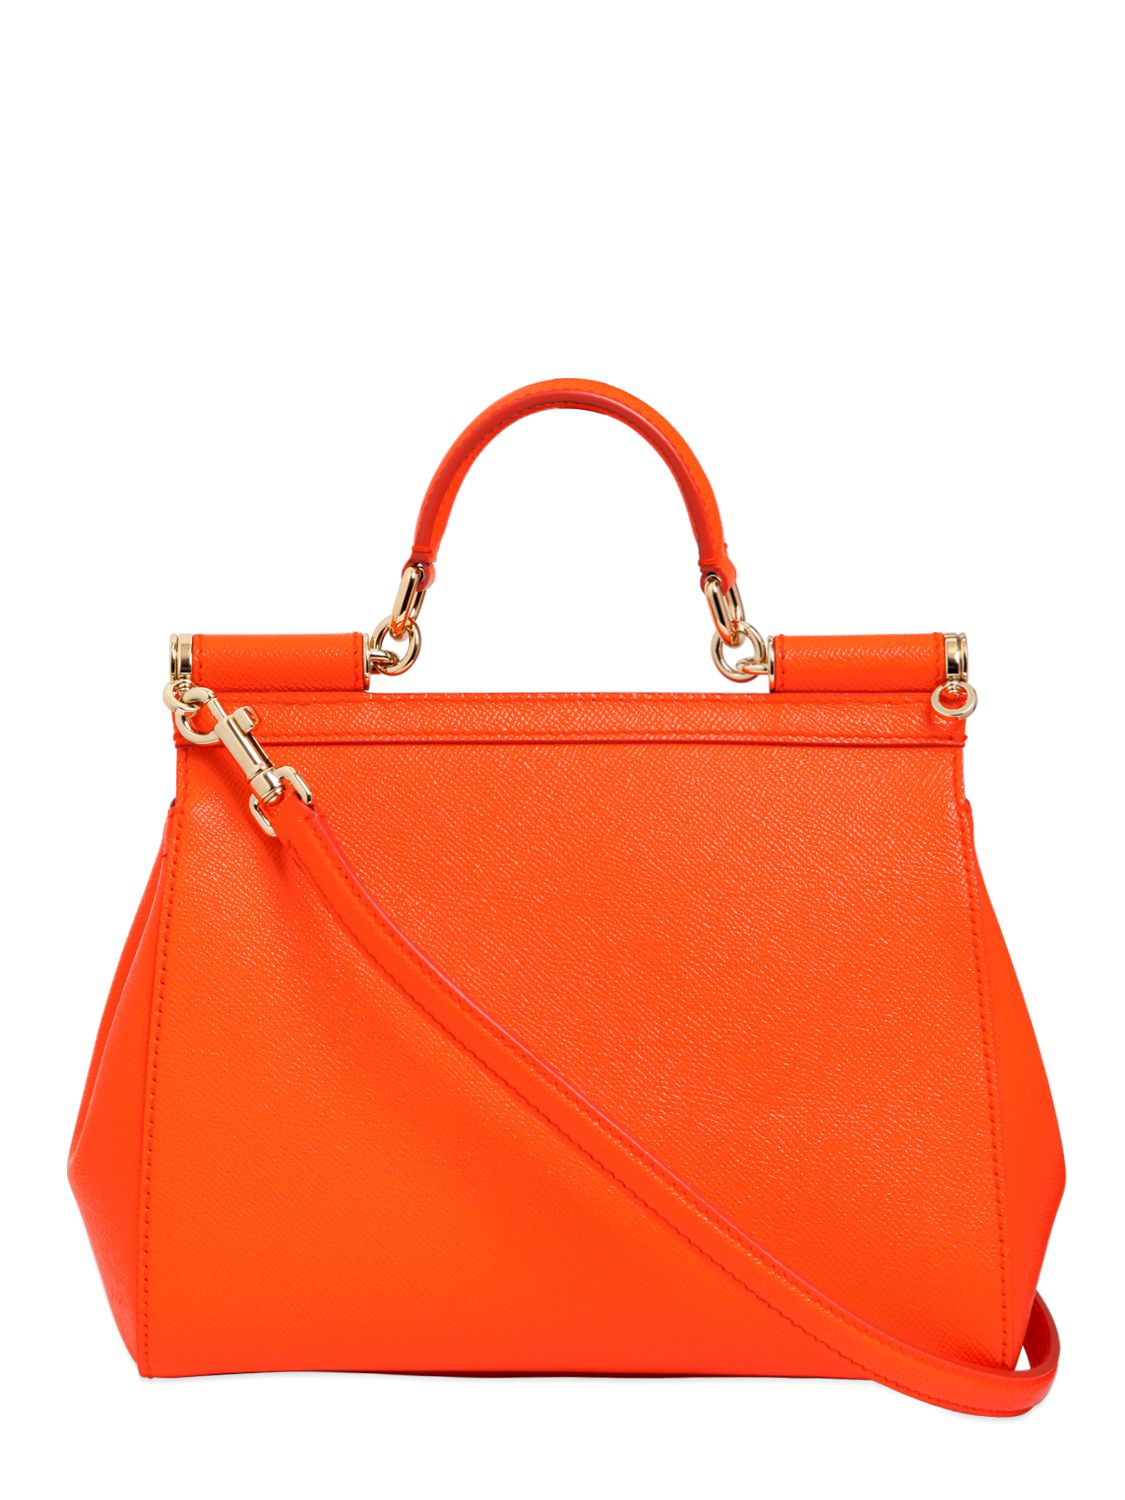 Dolce & gabbana Medium Sicily Dauphine Leather Bag in Orange | Lyst